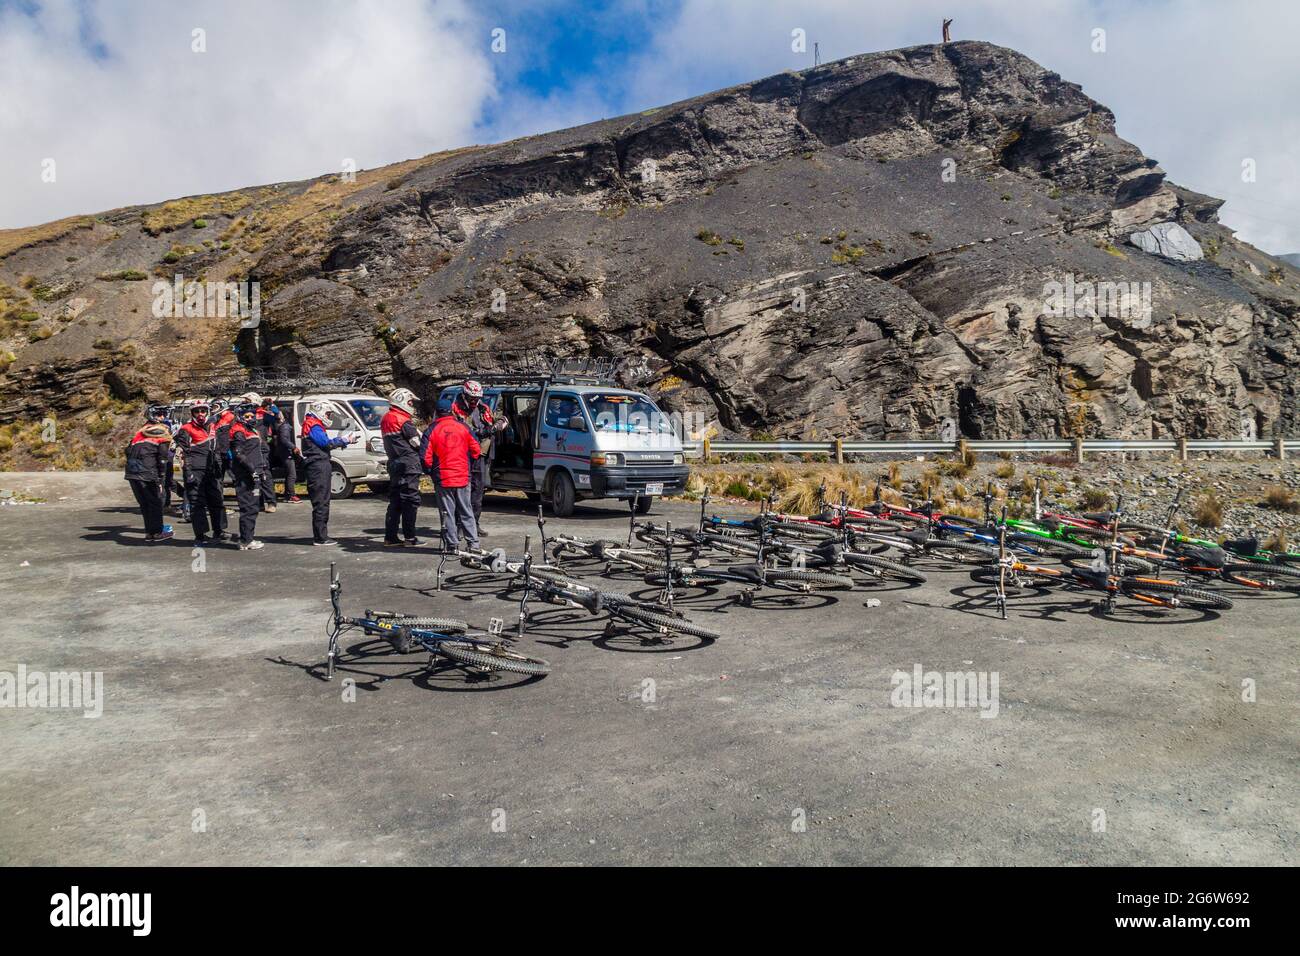 LA CUMBRE, BOLIVIA: APRIL 29, 2015: Bicycles and participants prepared for descent of The World's most dangerous road at La Cumbre pass (altitude 4700 Stock Photo